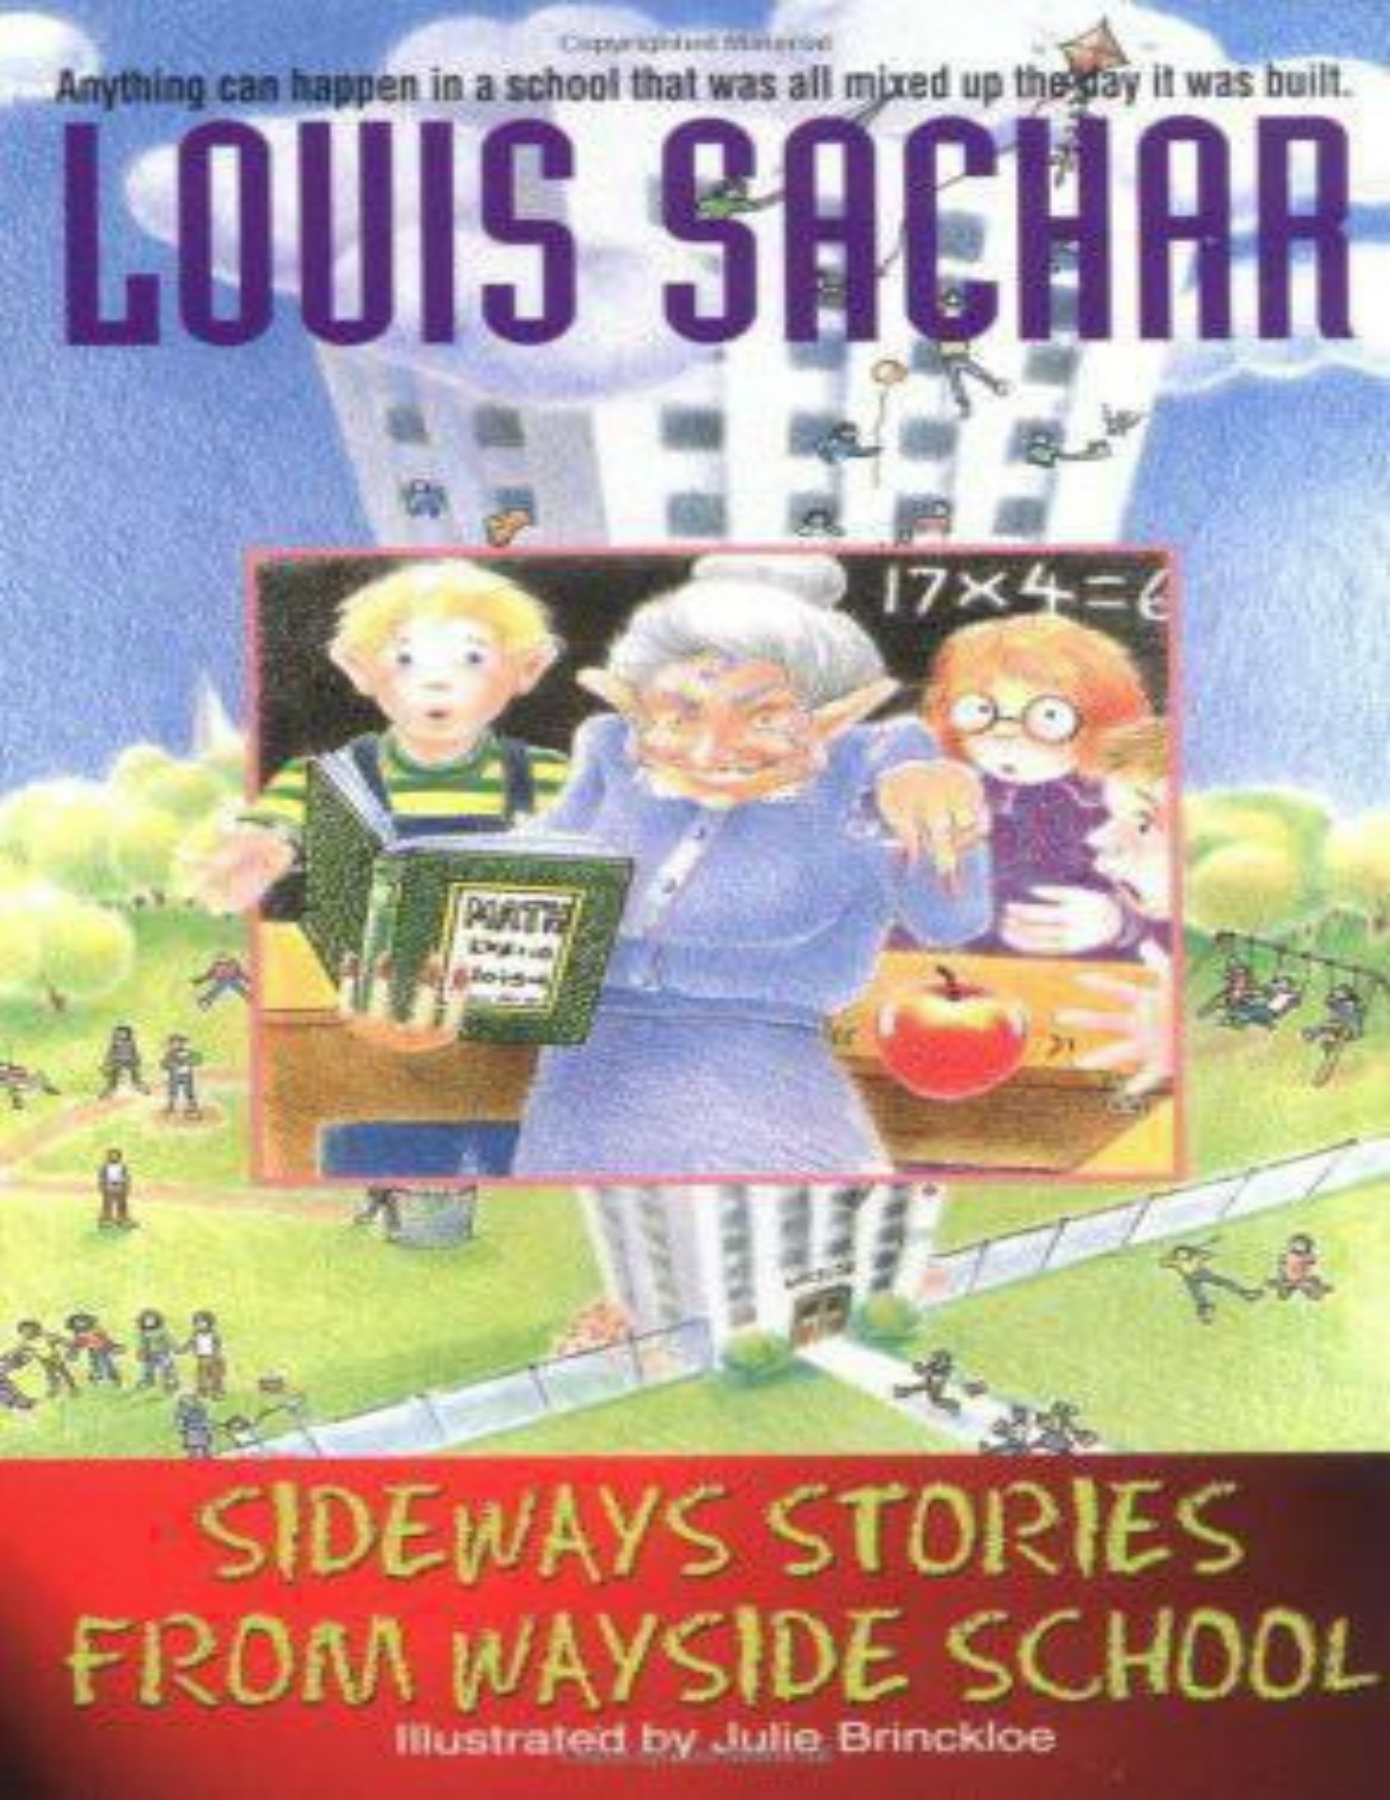 Sideways stories from Wayside School - Forsyth County Public Library